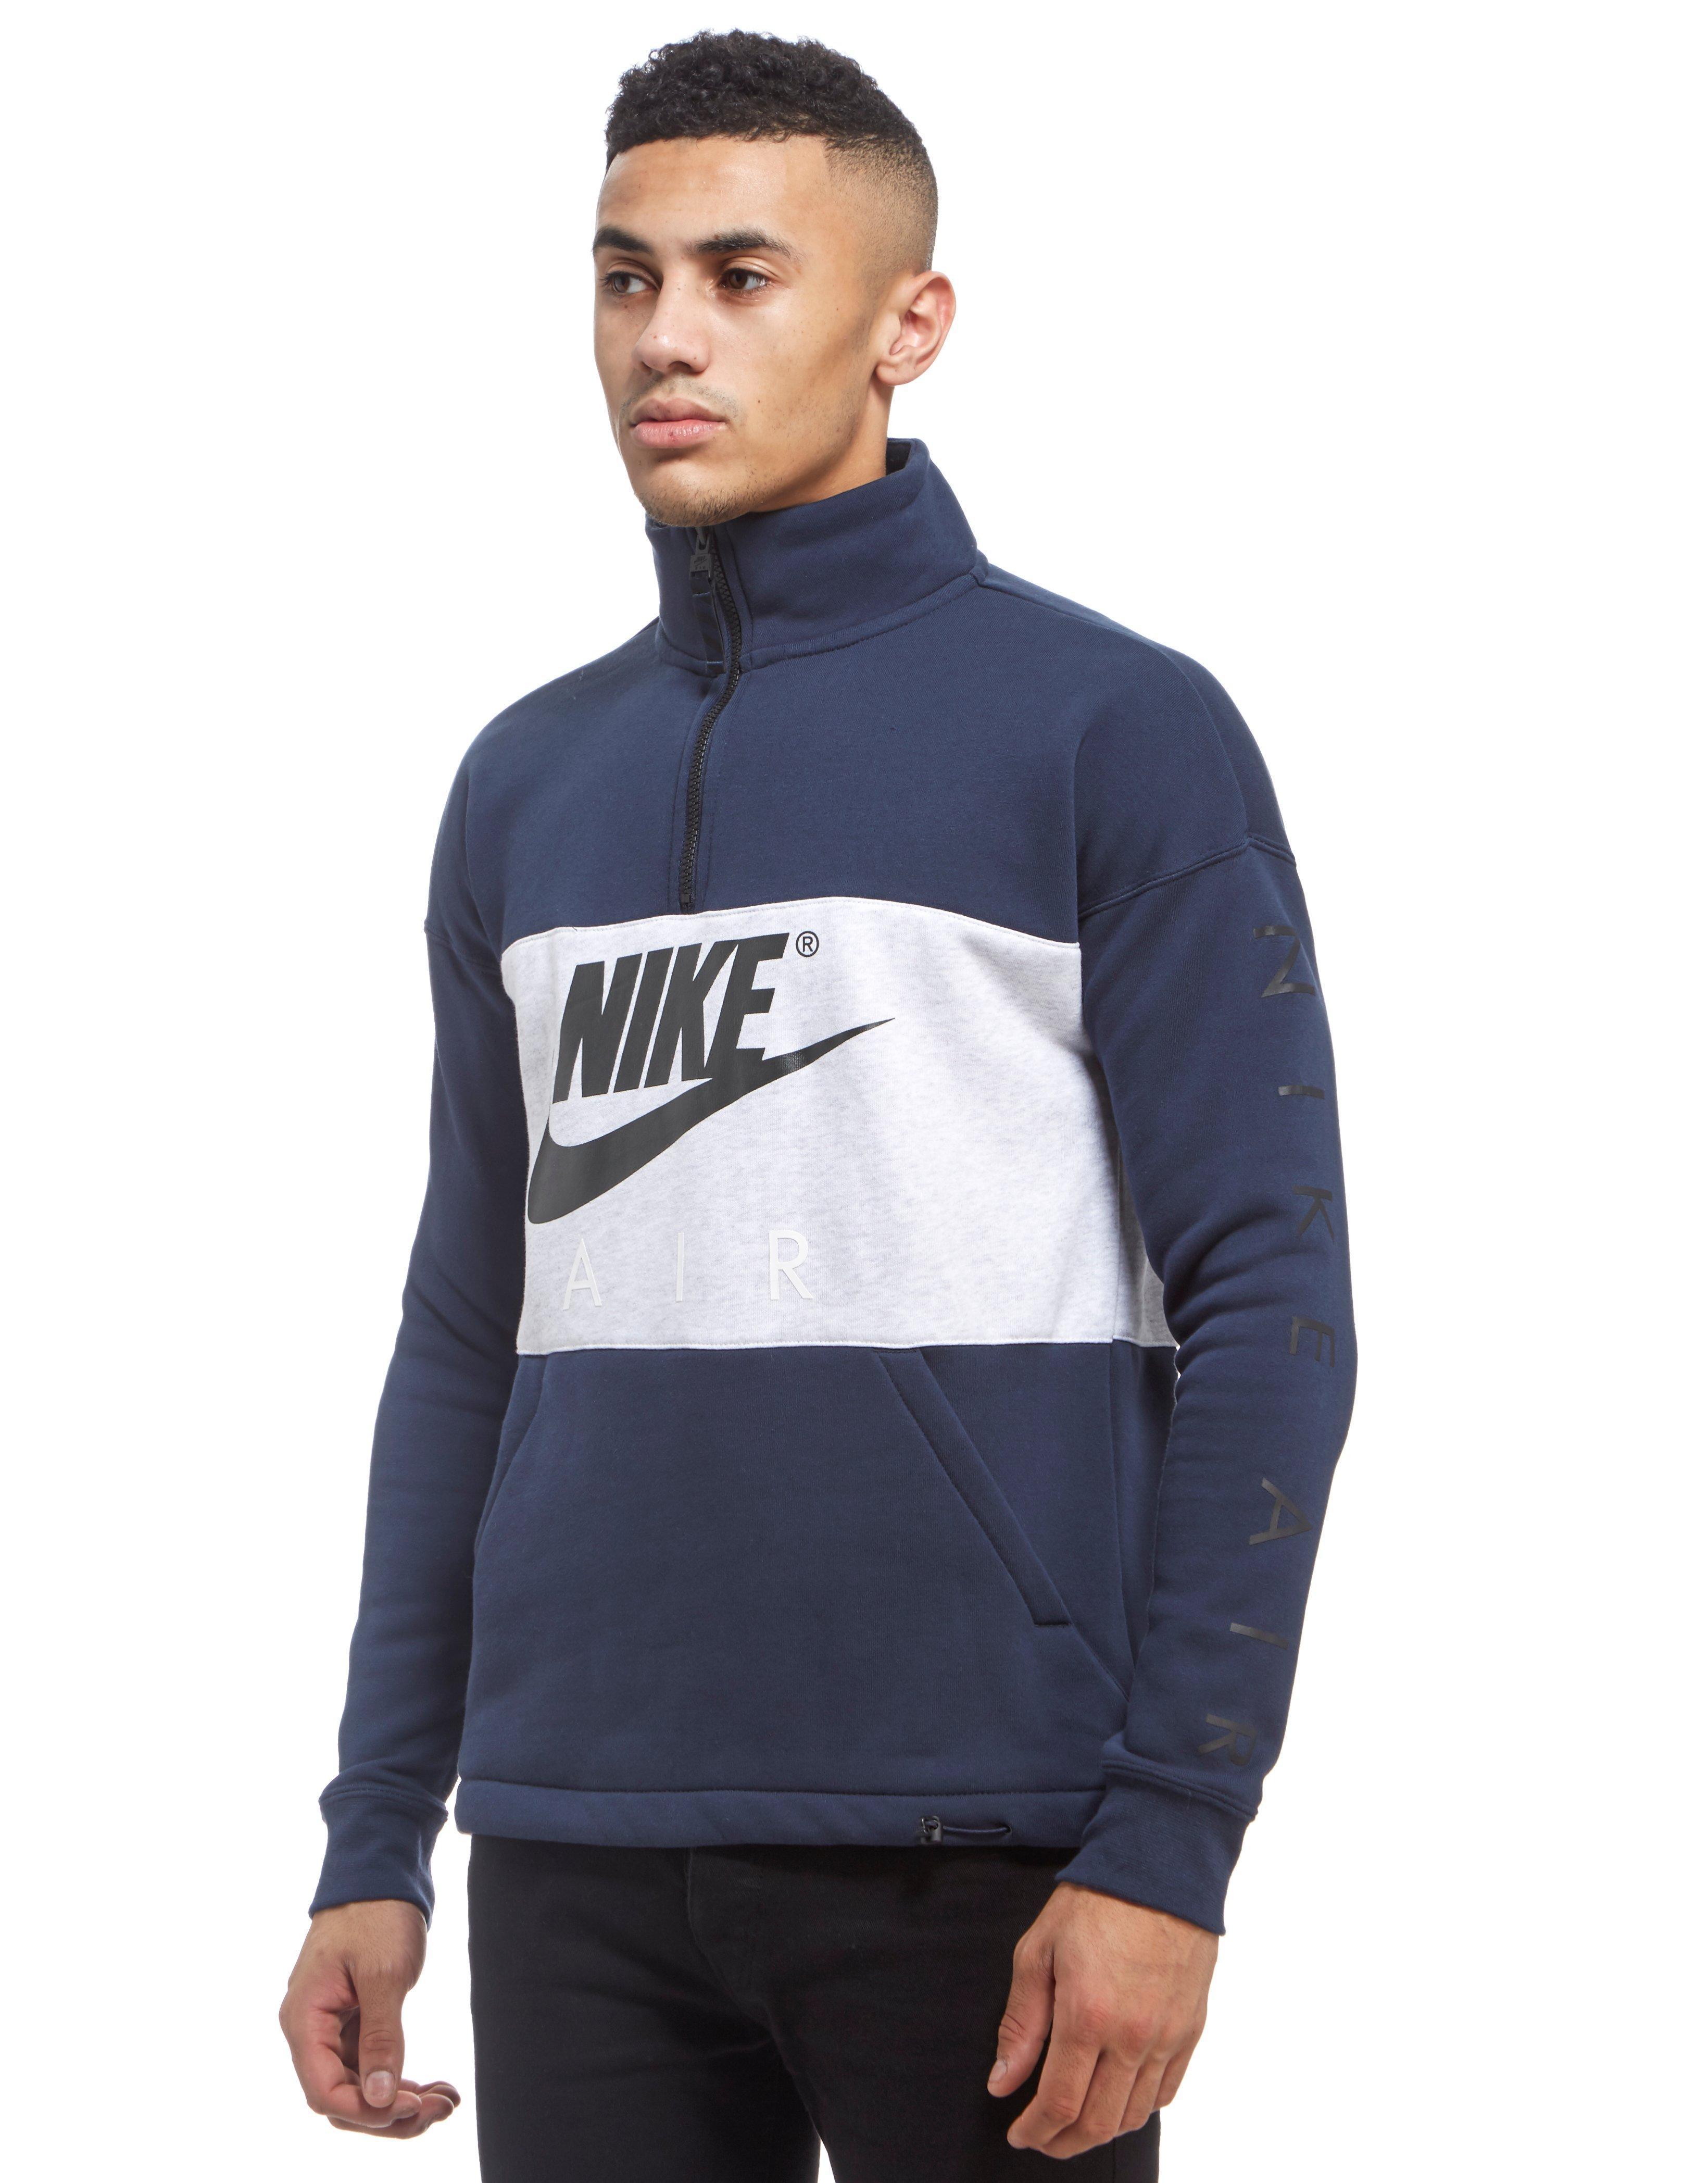 Nike Air Half Zip Fleece in Blue/White 